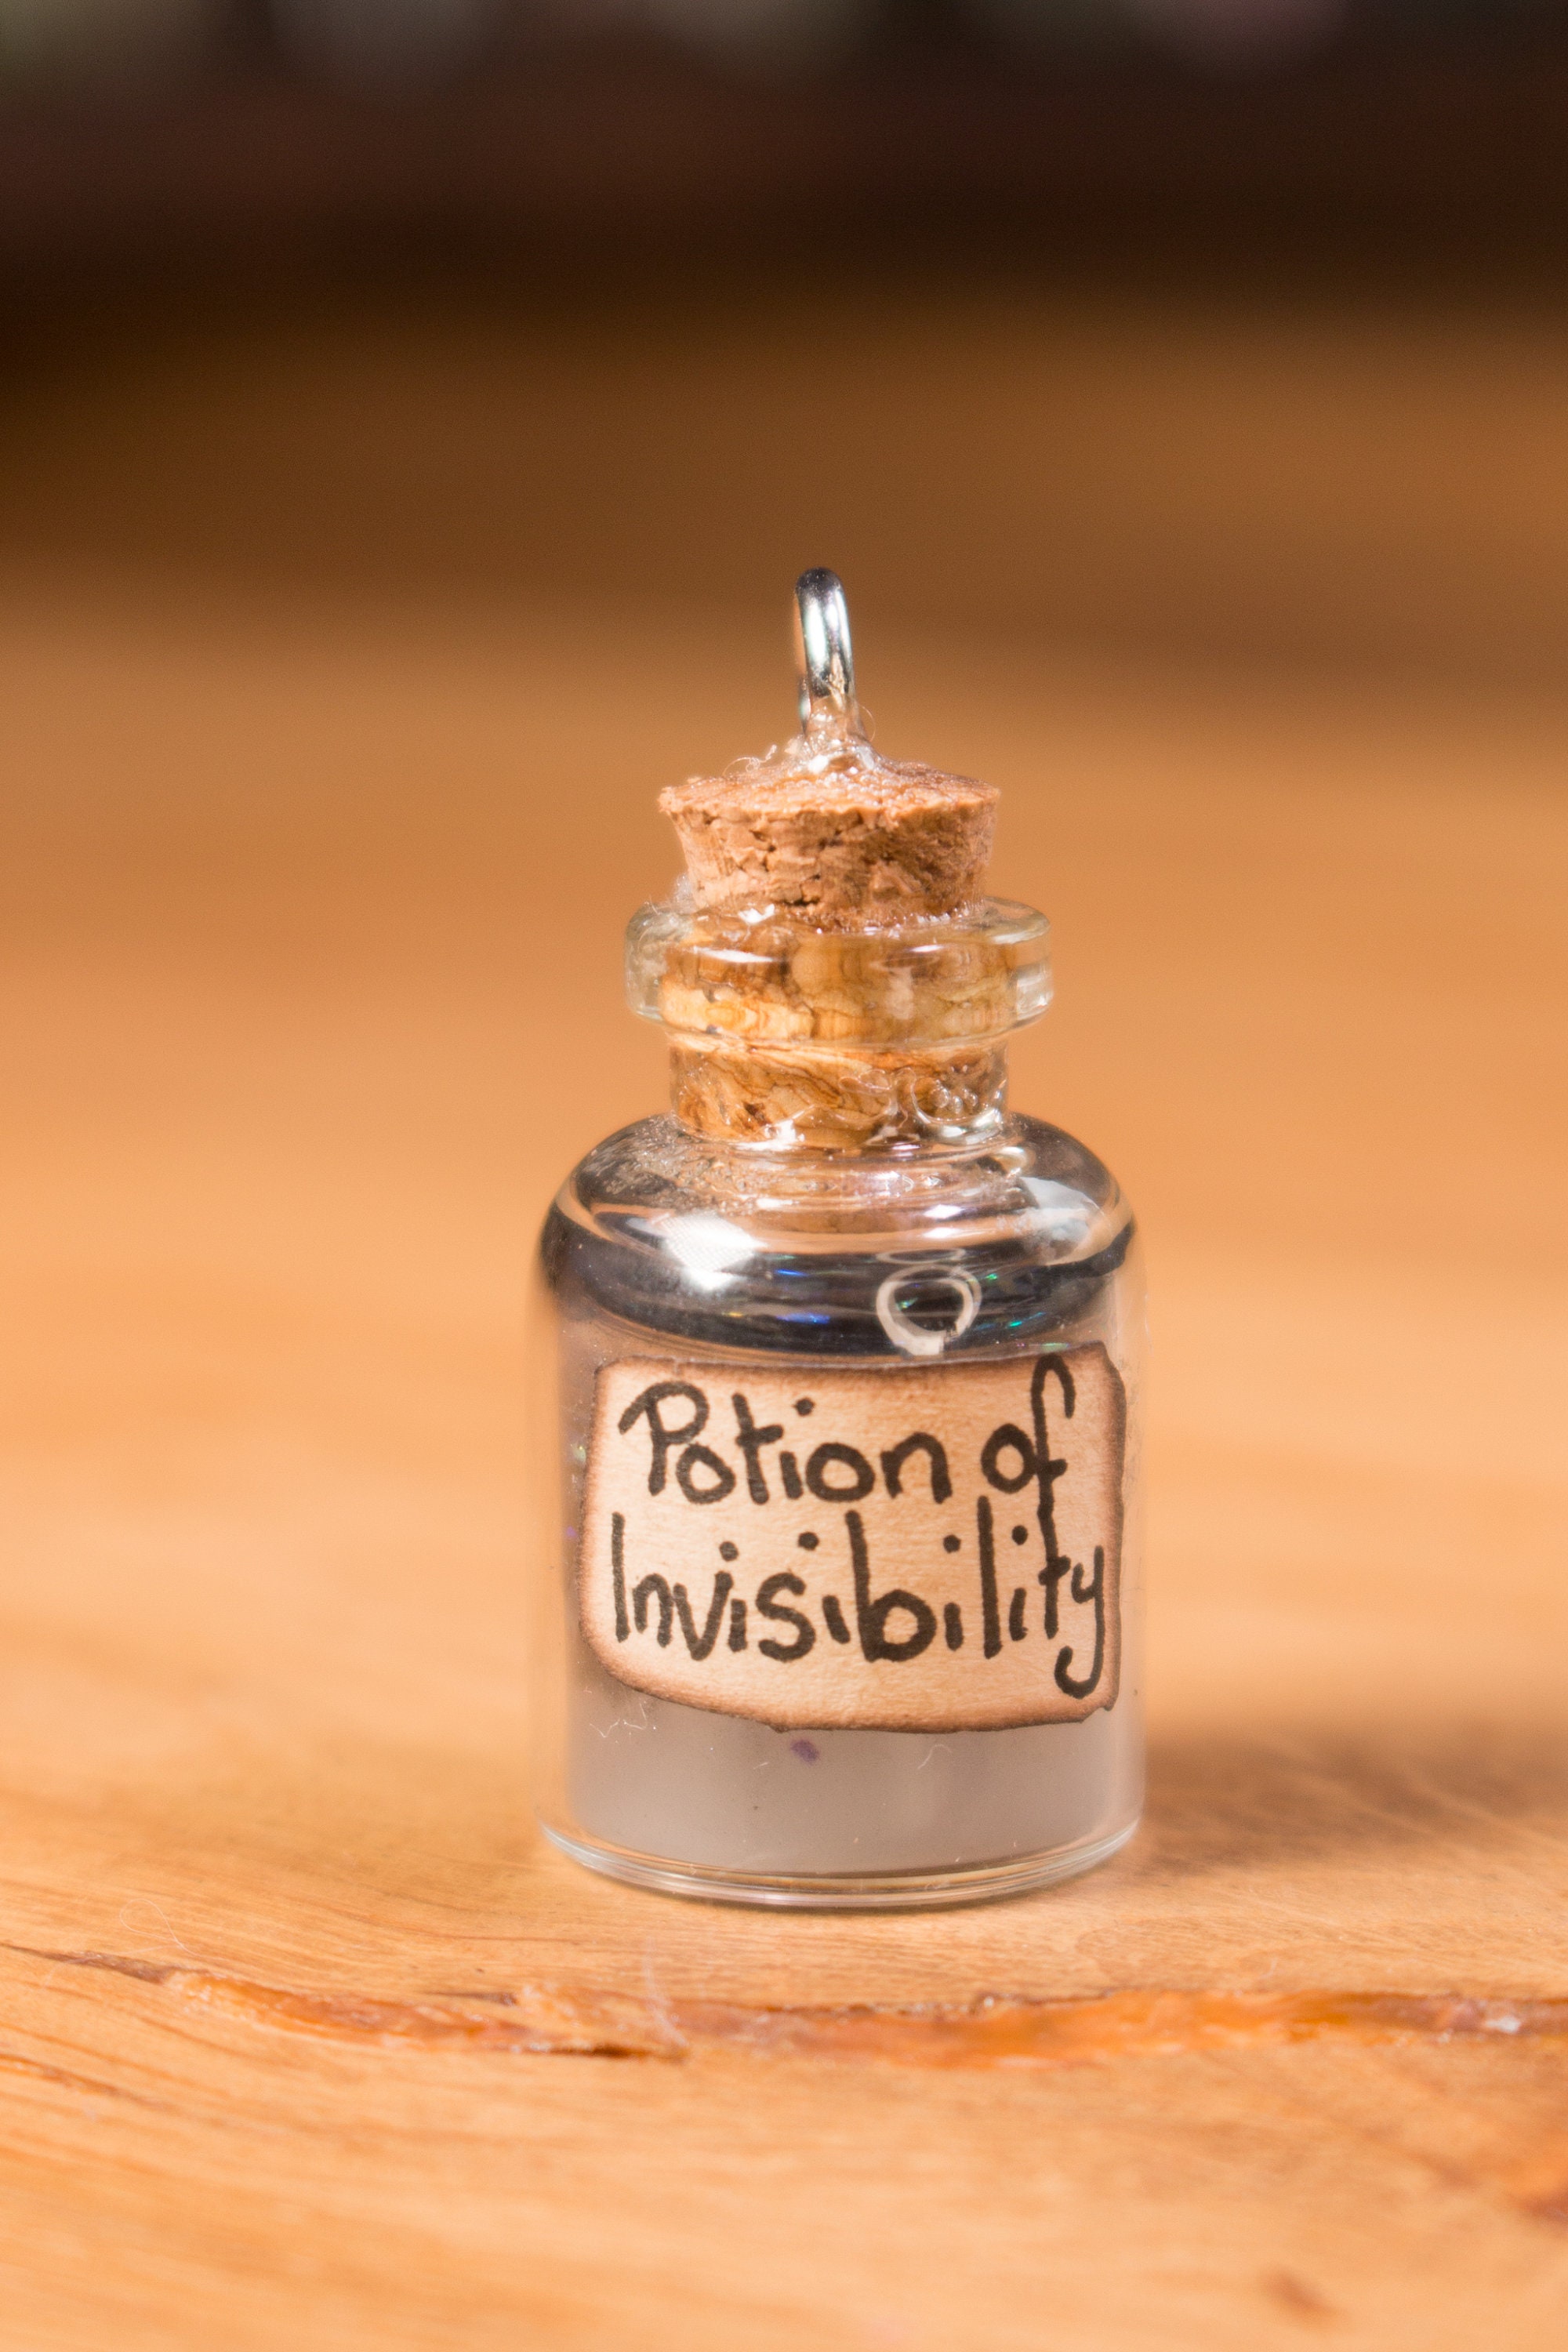 Harry Potter inspired Invisibility potion necklace by steveabbo on  DeviantArt